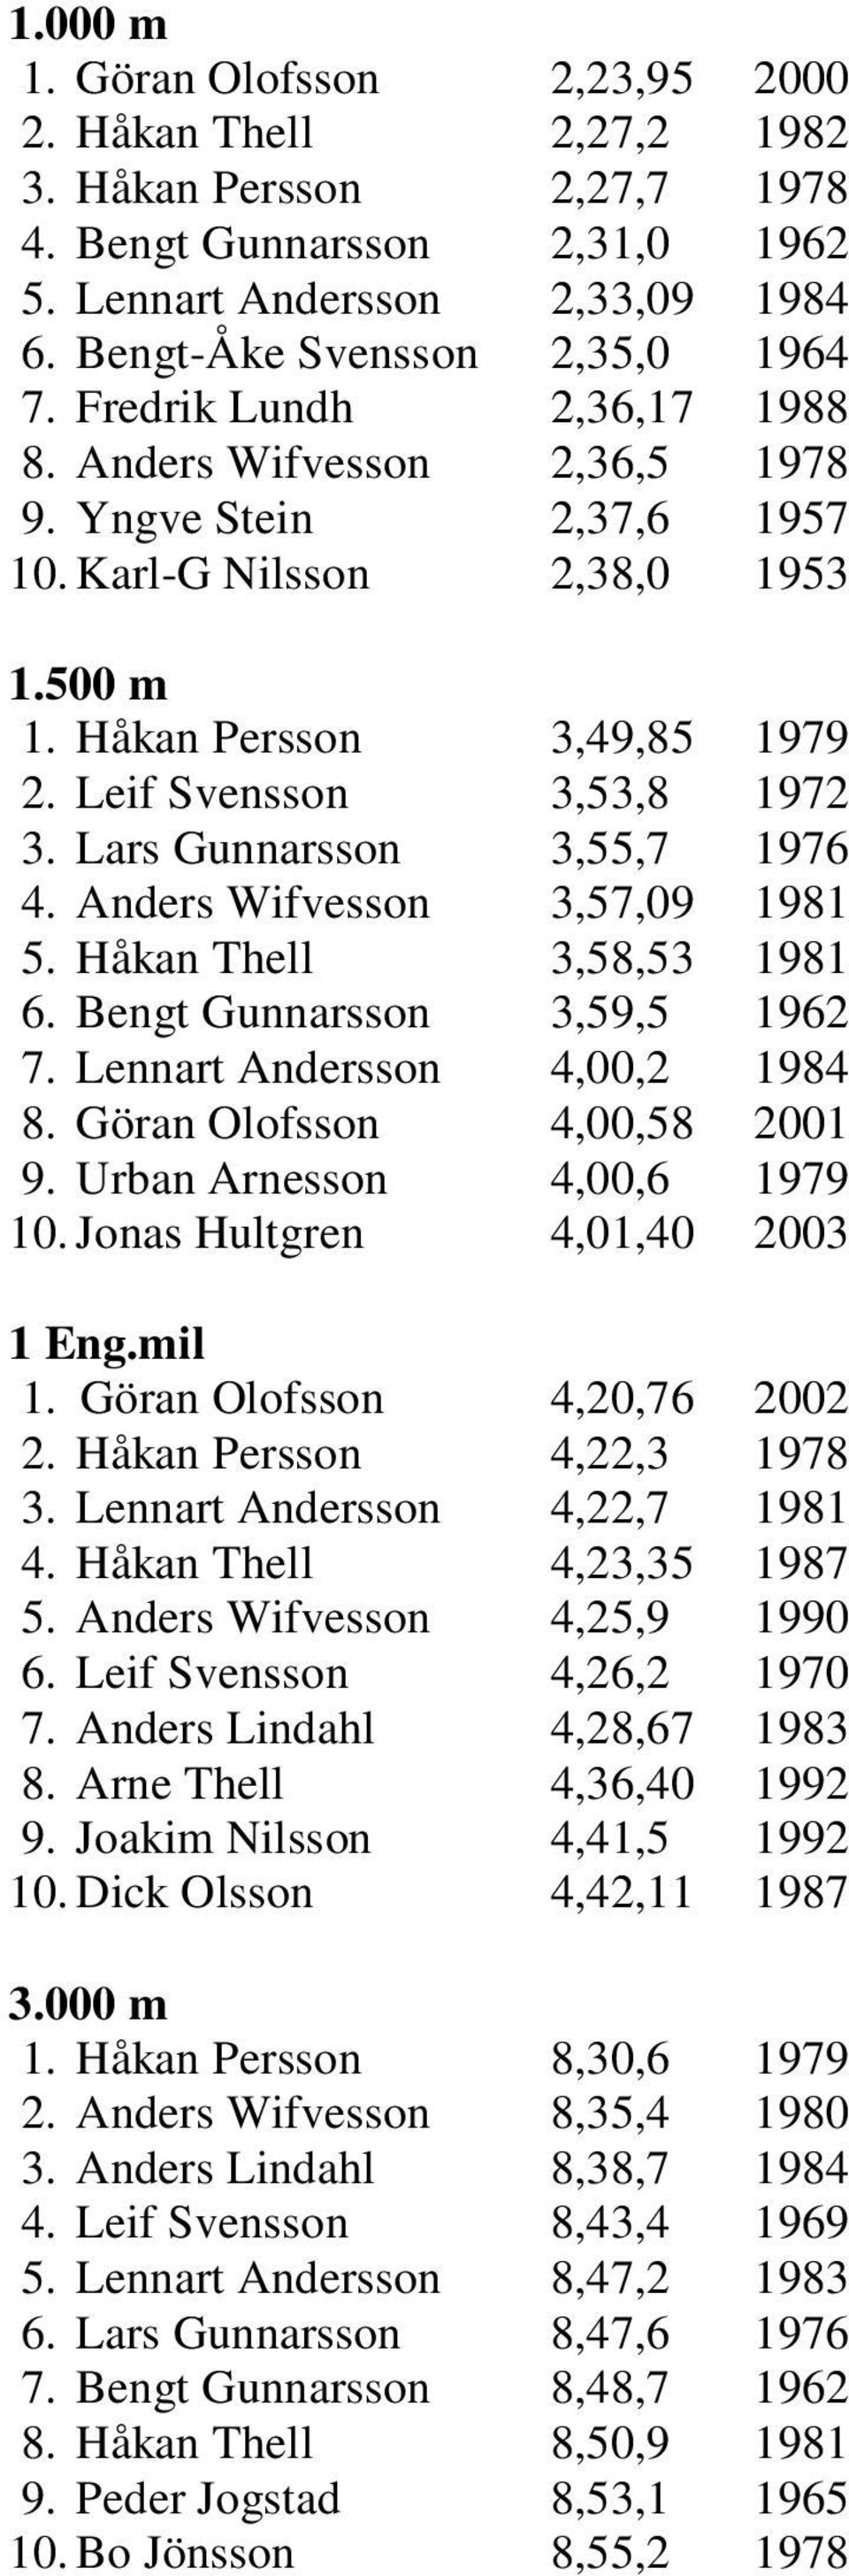 Lars Gunnarsson 3,55,7 1976 4. Anders Wifvesson 3,57,09 1981 5. Håkan Thell 3,58,53 1981 6. Bengt Gunnarsson 3,59,5 1962 7. Lennart Andersson 4,00,2 1984 8. Göran Olofsson 4,00,58 2001 9.